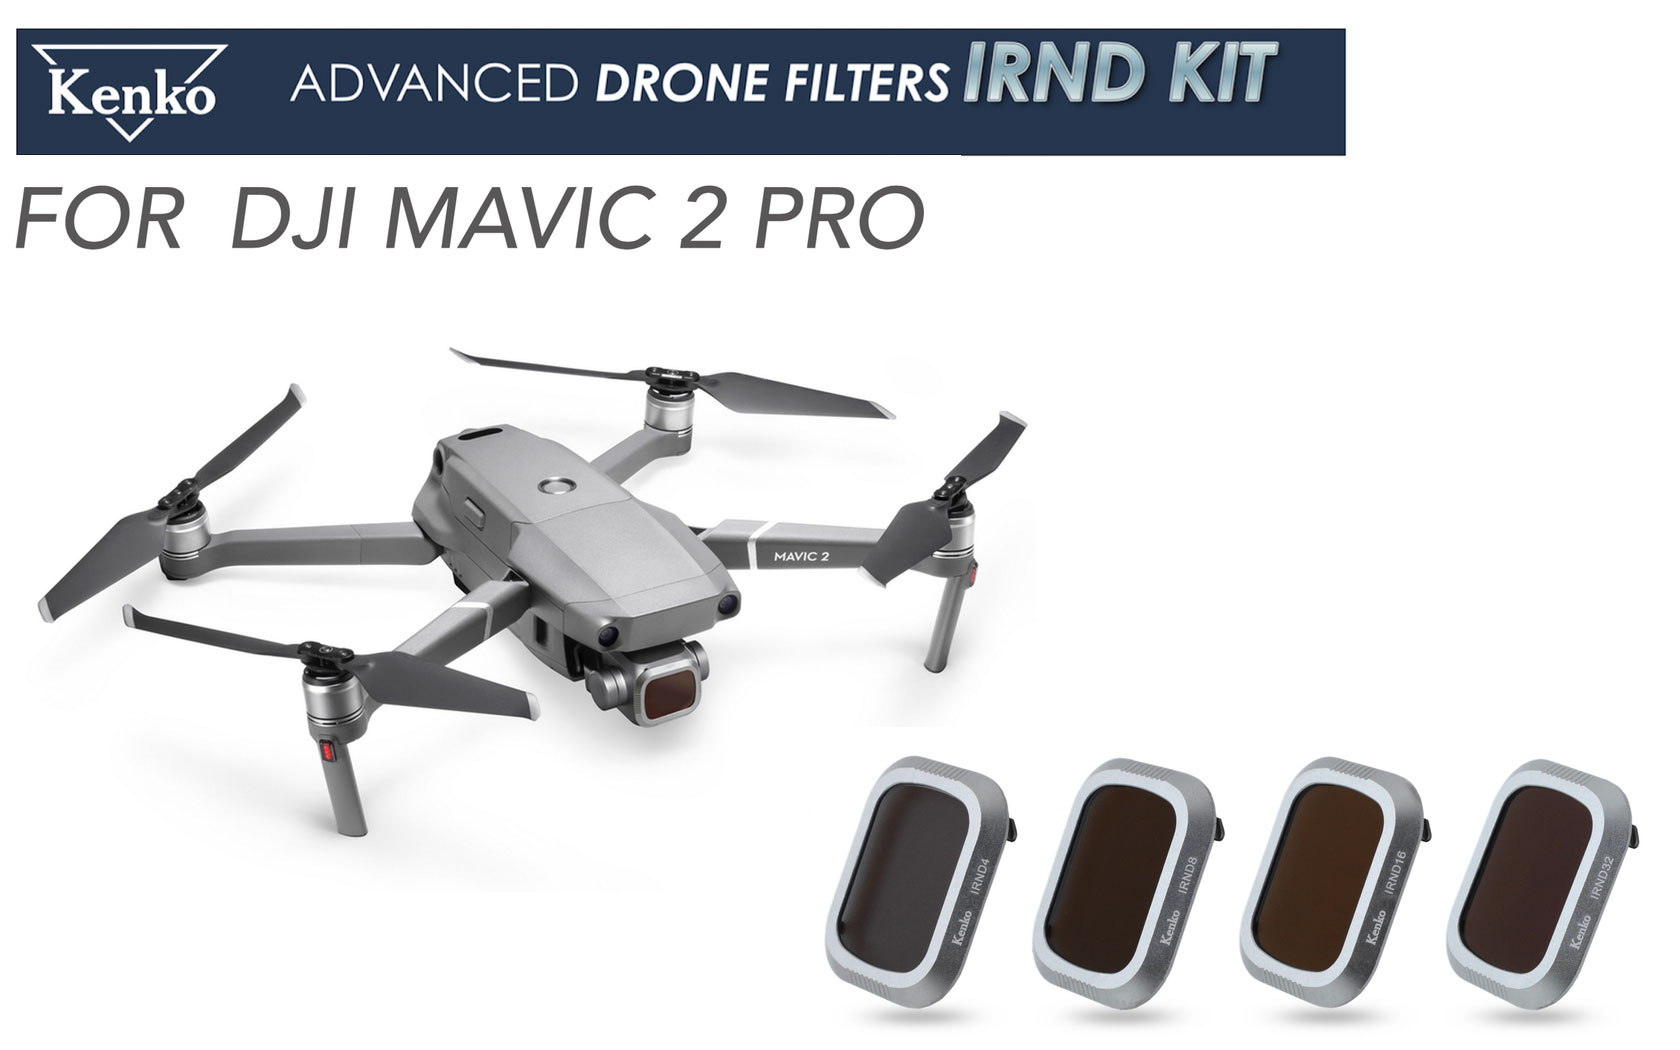 Pedicab stockings Devour Kenko Global - Advanced Drone Filters IRND kit for DJI Mavic 2 Pro